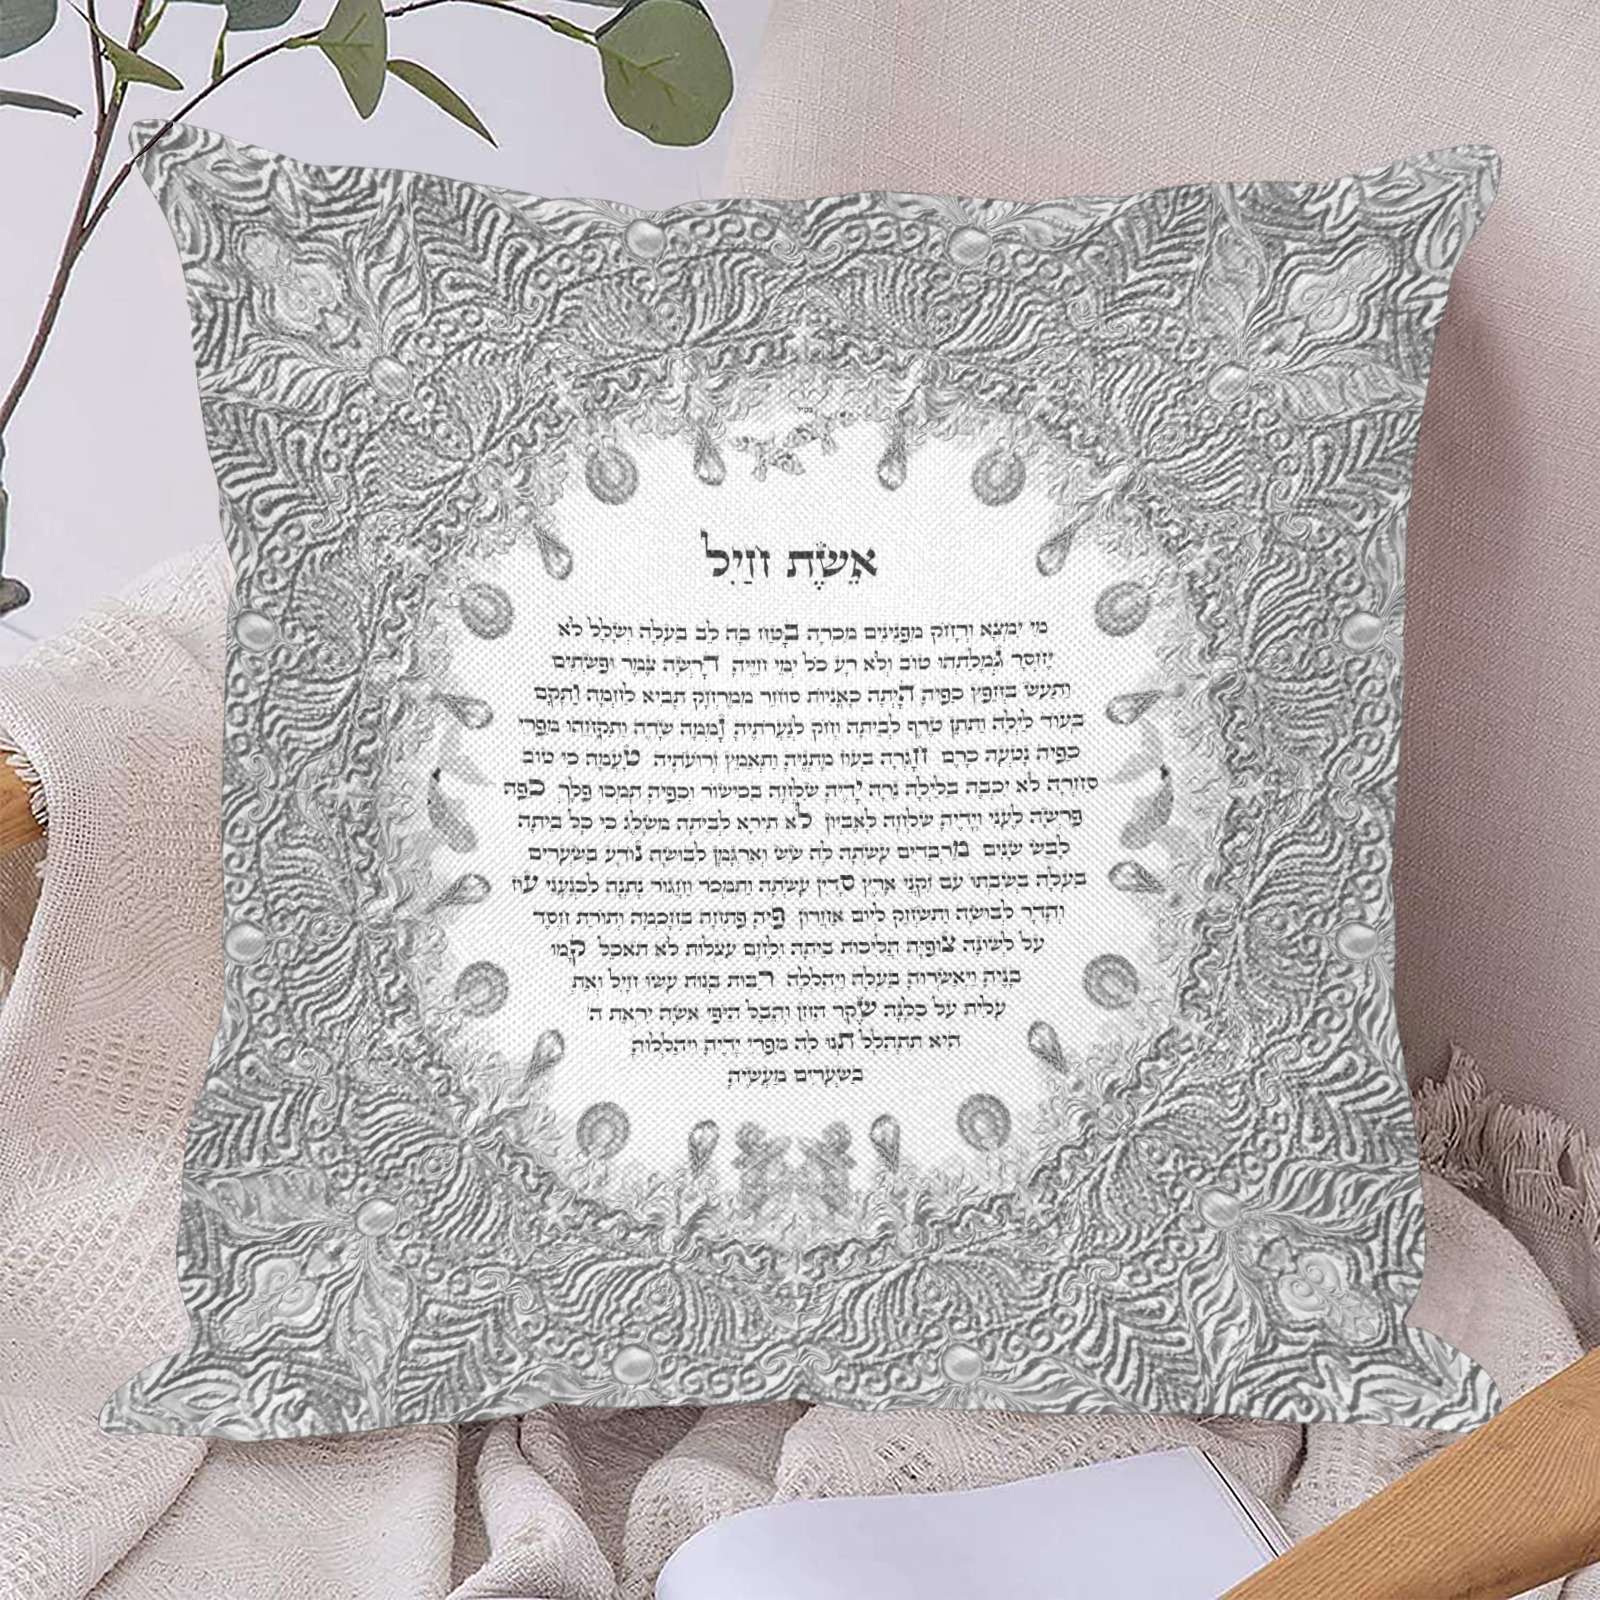 Eshet Chayil-Hebrew -20x20-1 Linen Zippered Pillowcase 18"x18"(One Side)